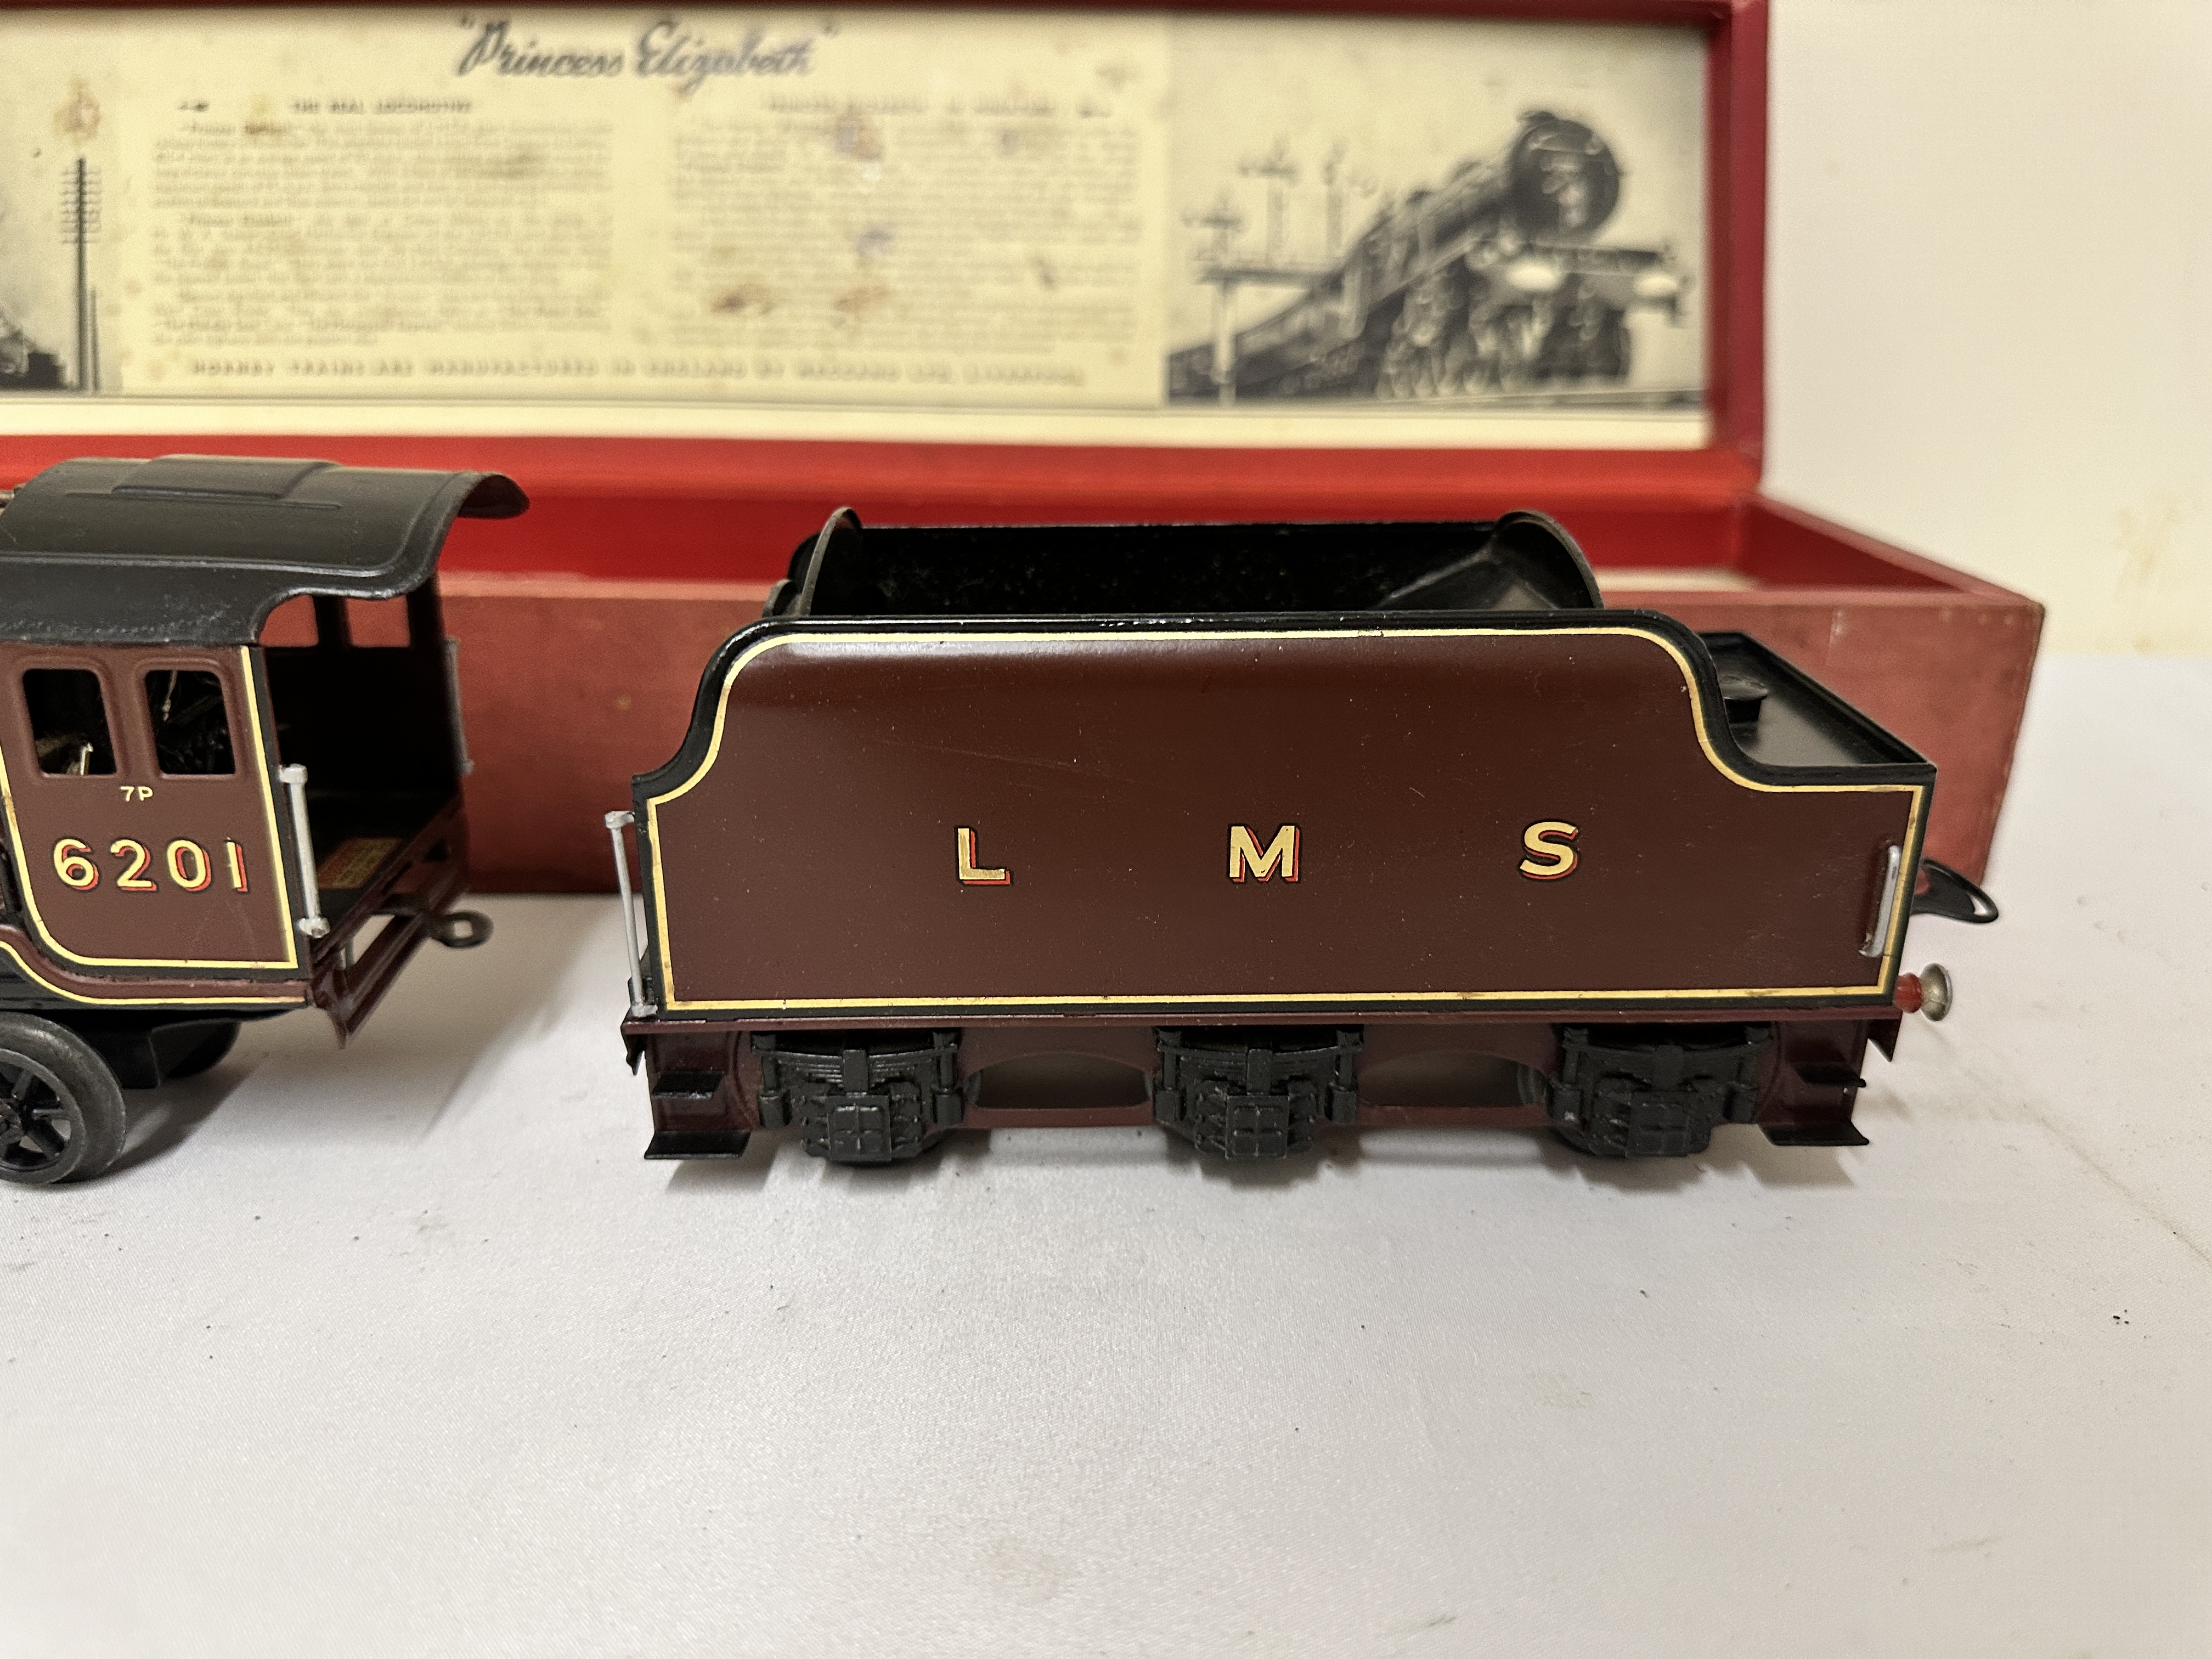 Hornby 0 gauge electric locomotive "The Princess Elizabeth" with tender, in original box. - Image 3 of 3